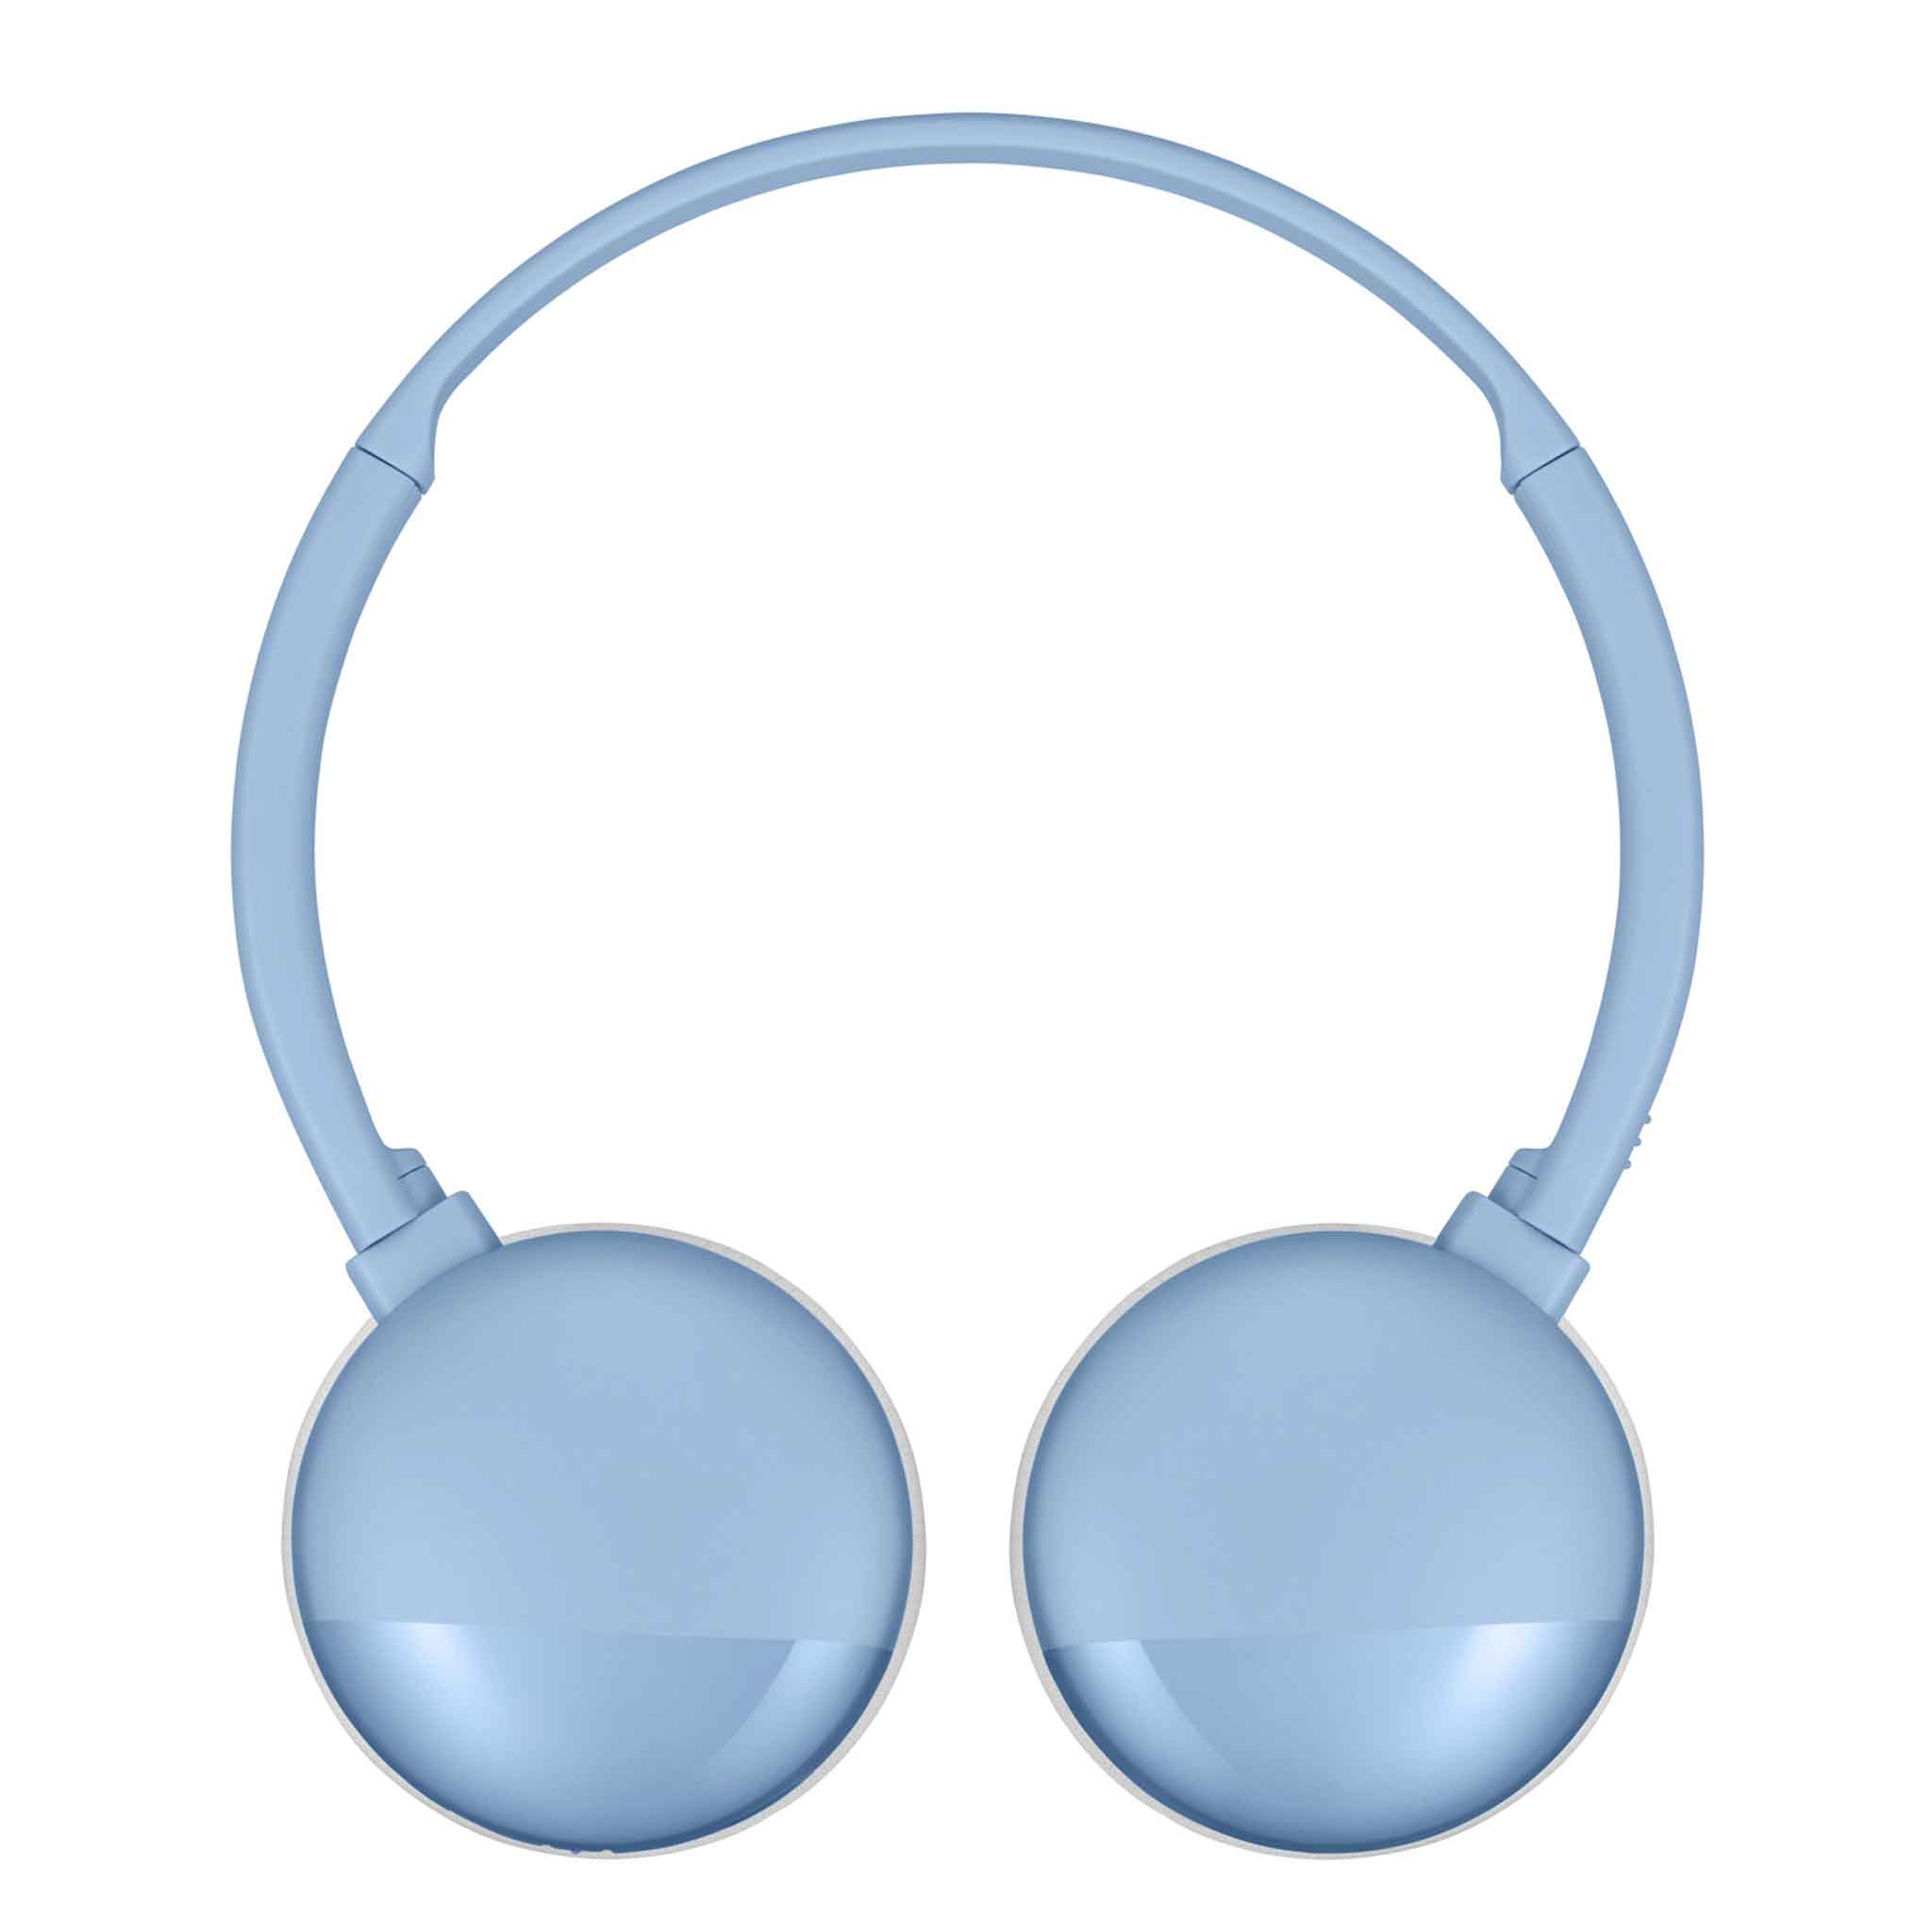 JVC HA-S22W in Blue Bluetooth Headphones lay flat